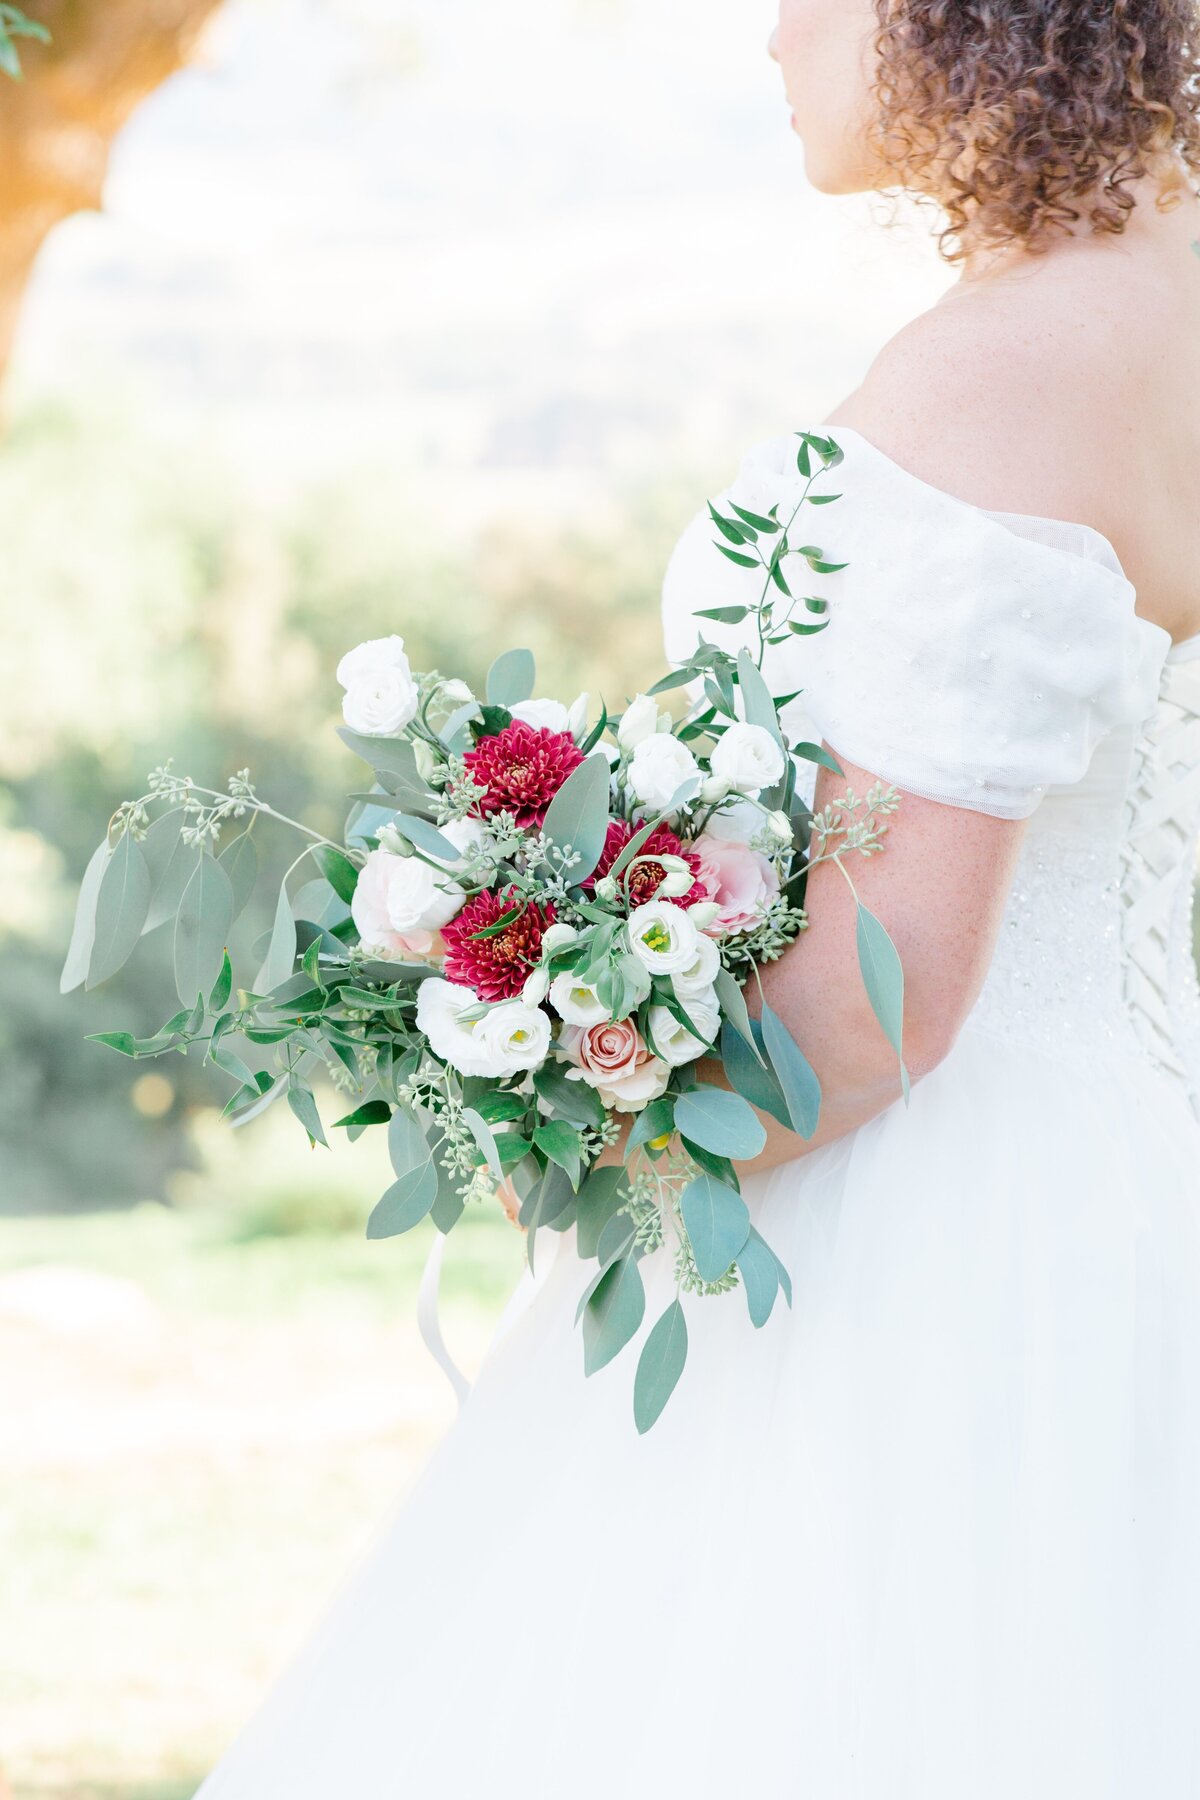 erica-lauren-photography-stacey-lance-tuscany-italy-wedding-sept-05-2020-162